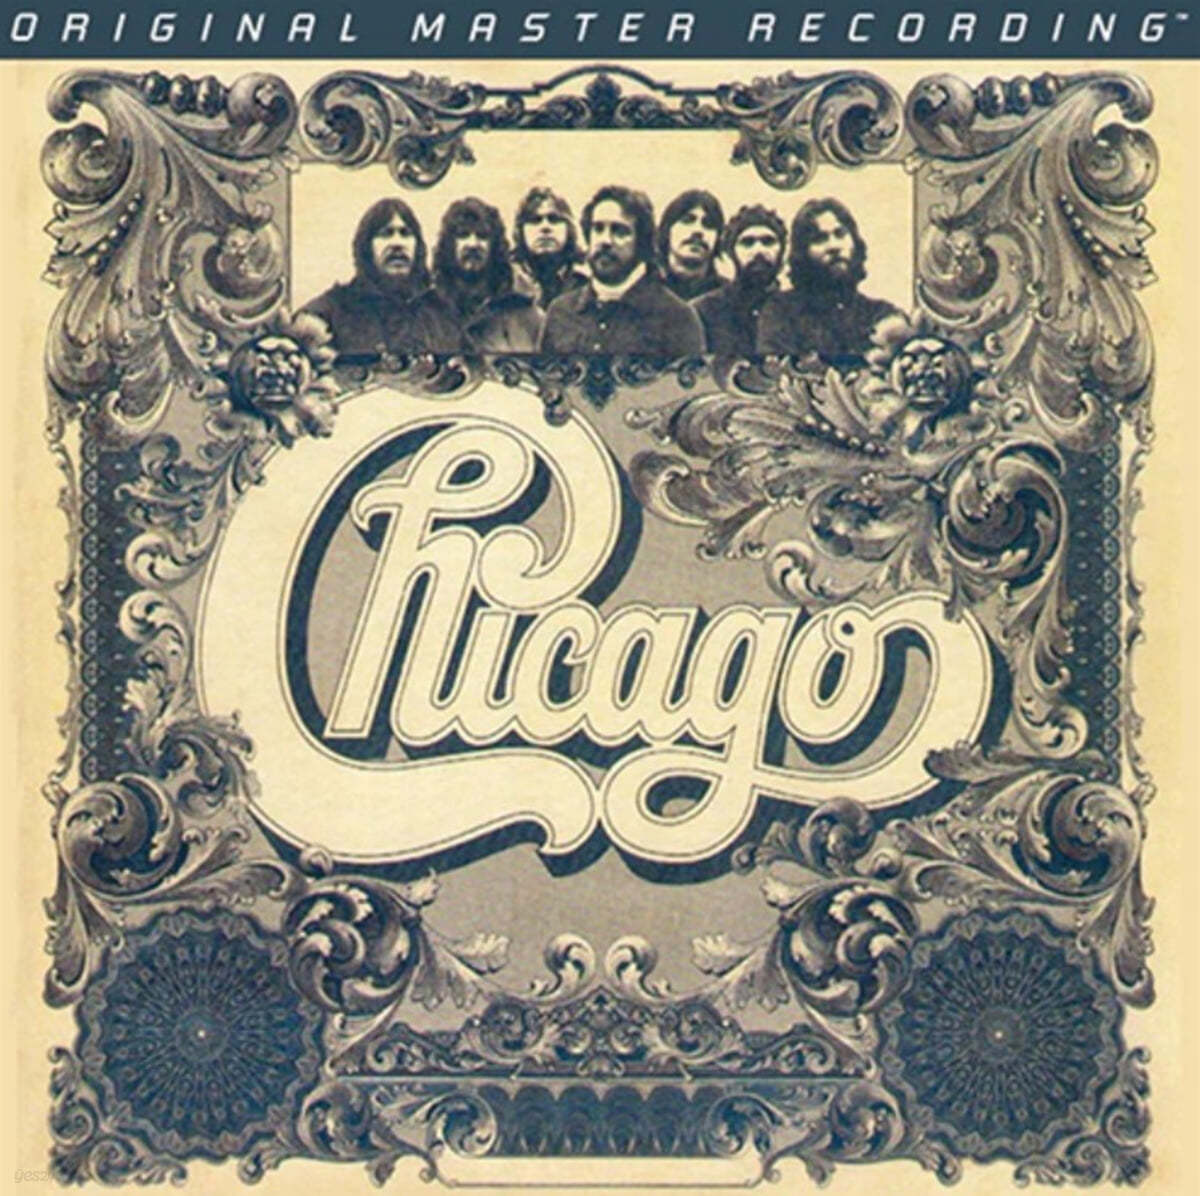 Chicago (시카고) - Chicago VI